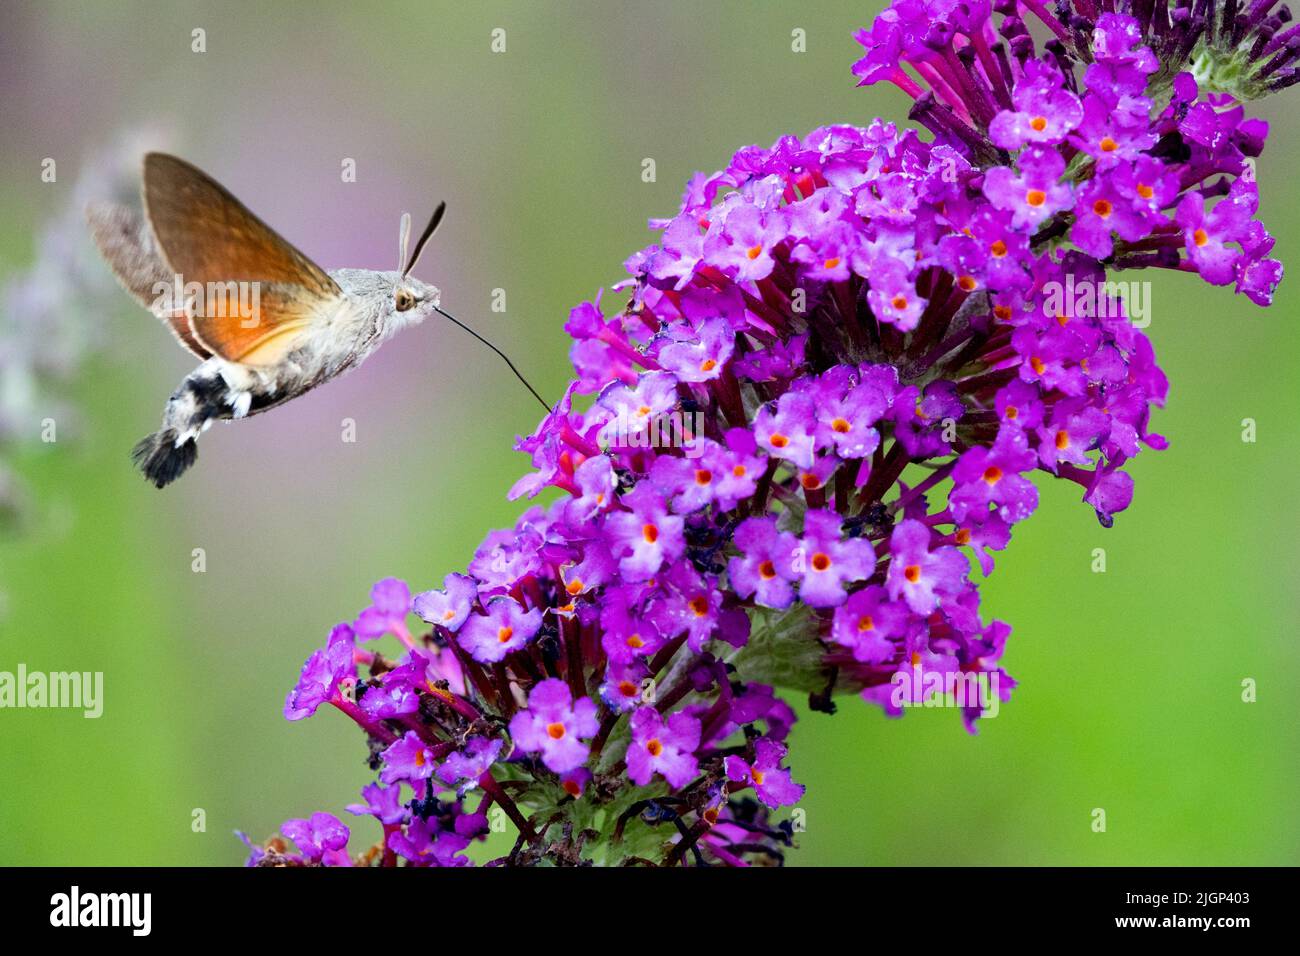 Kolibri-Falkenmotte saugt Nektar aus winzigen röhrenförmigen Blüten, lange Proboscis Macroglossum stellatarum Motte im Flug Butterfly Bush Mitteleuropa Stockfoto